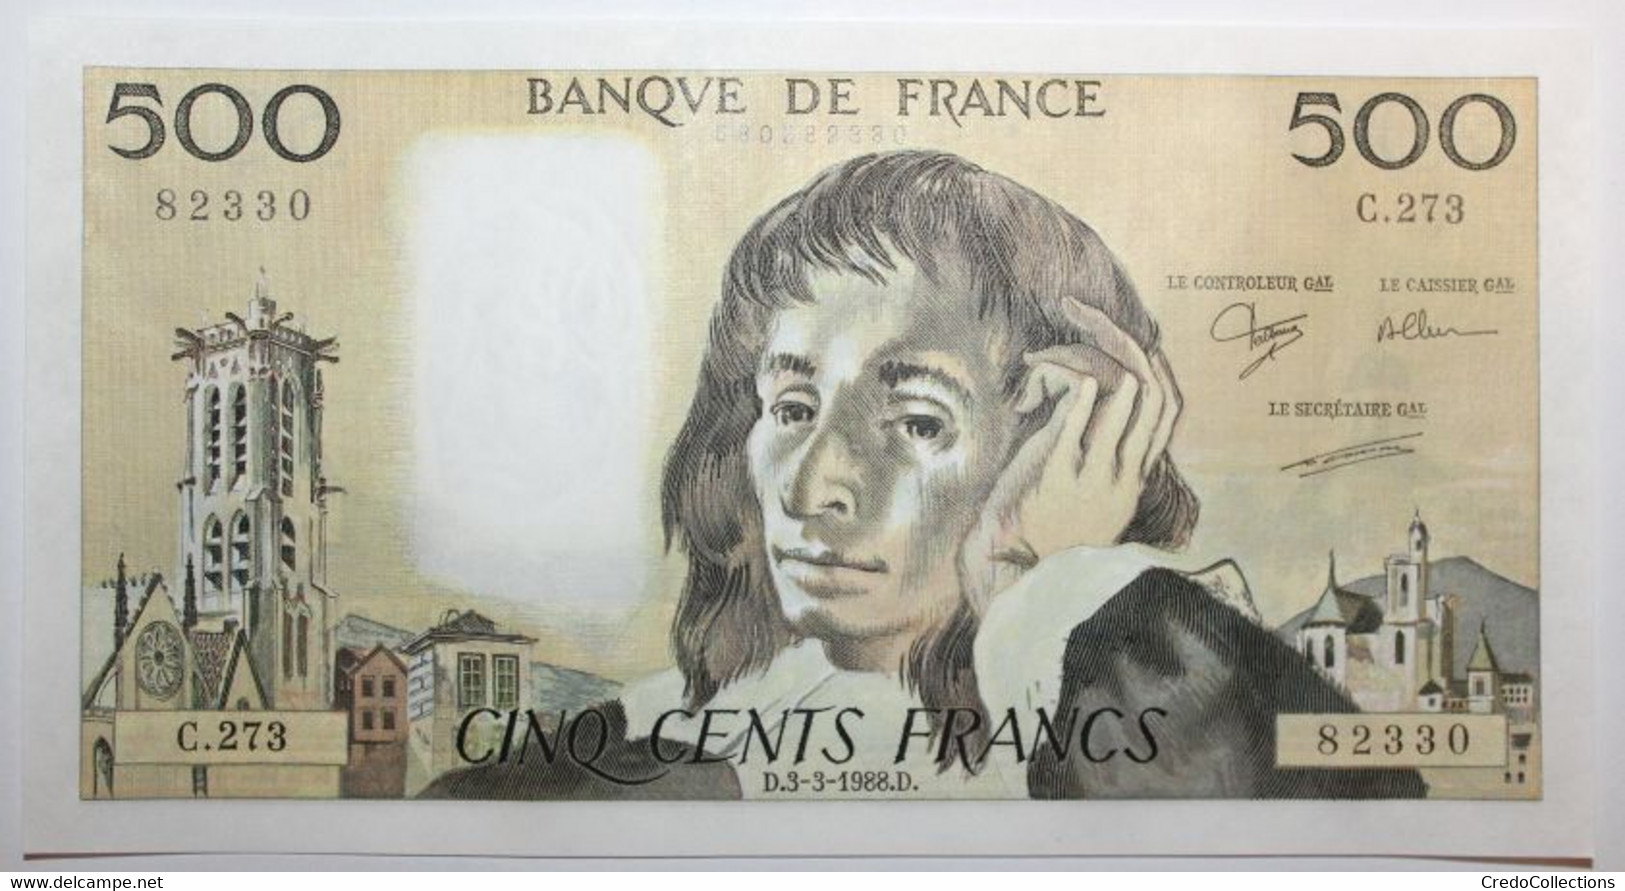 France - 500 Francs - 3-3-1988 - PICK 156g.1 / F71.38 - NEUF (3 billets)